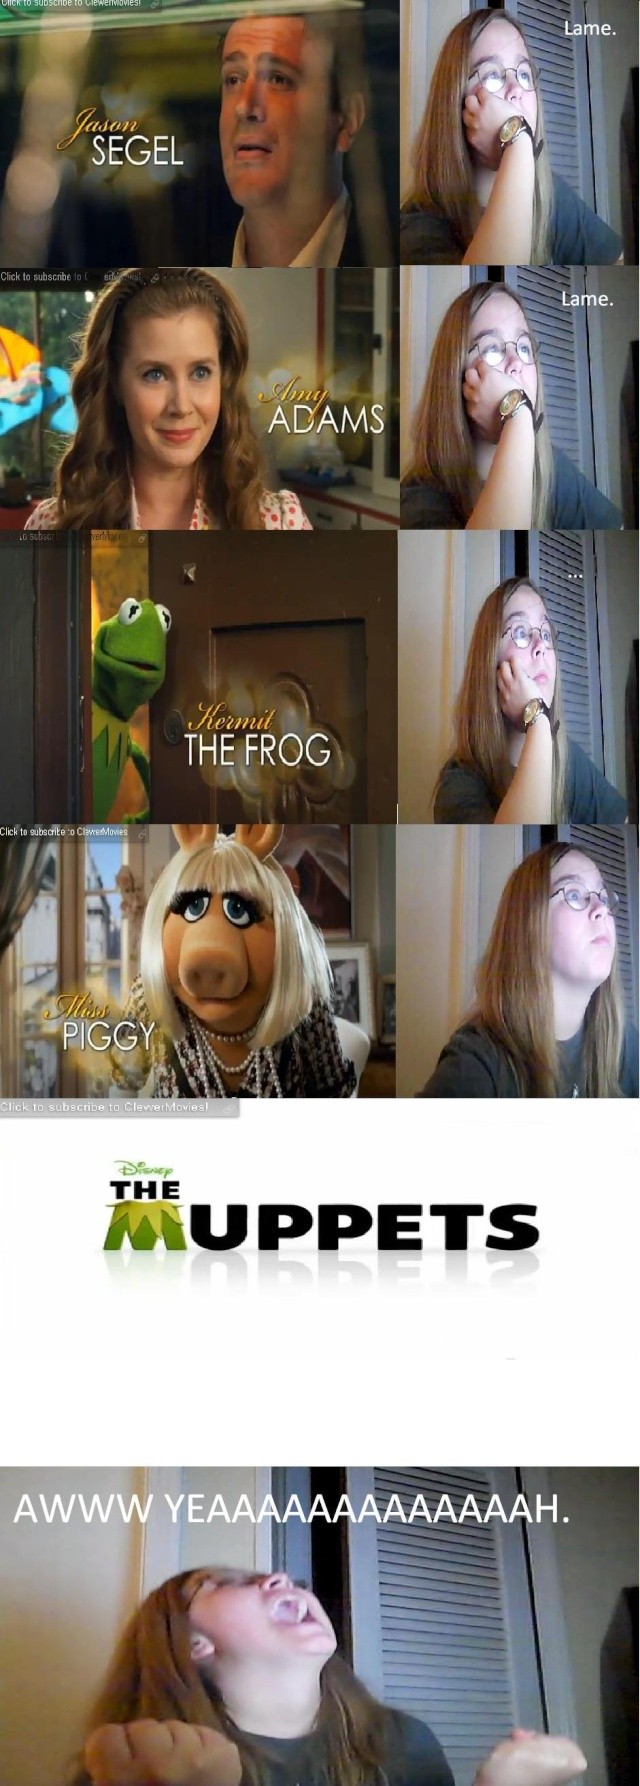 muppet12.jpg